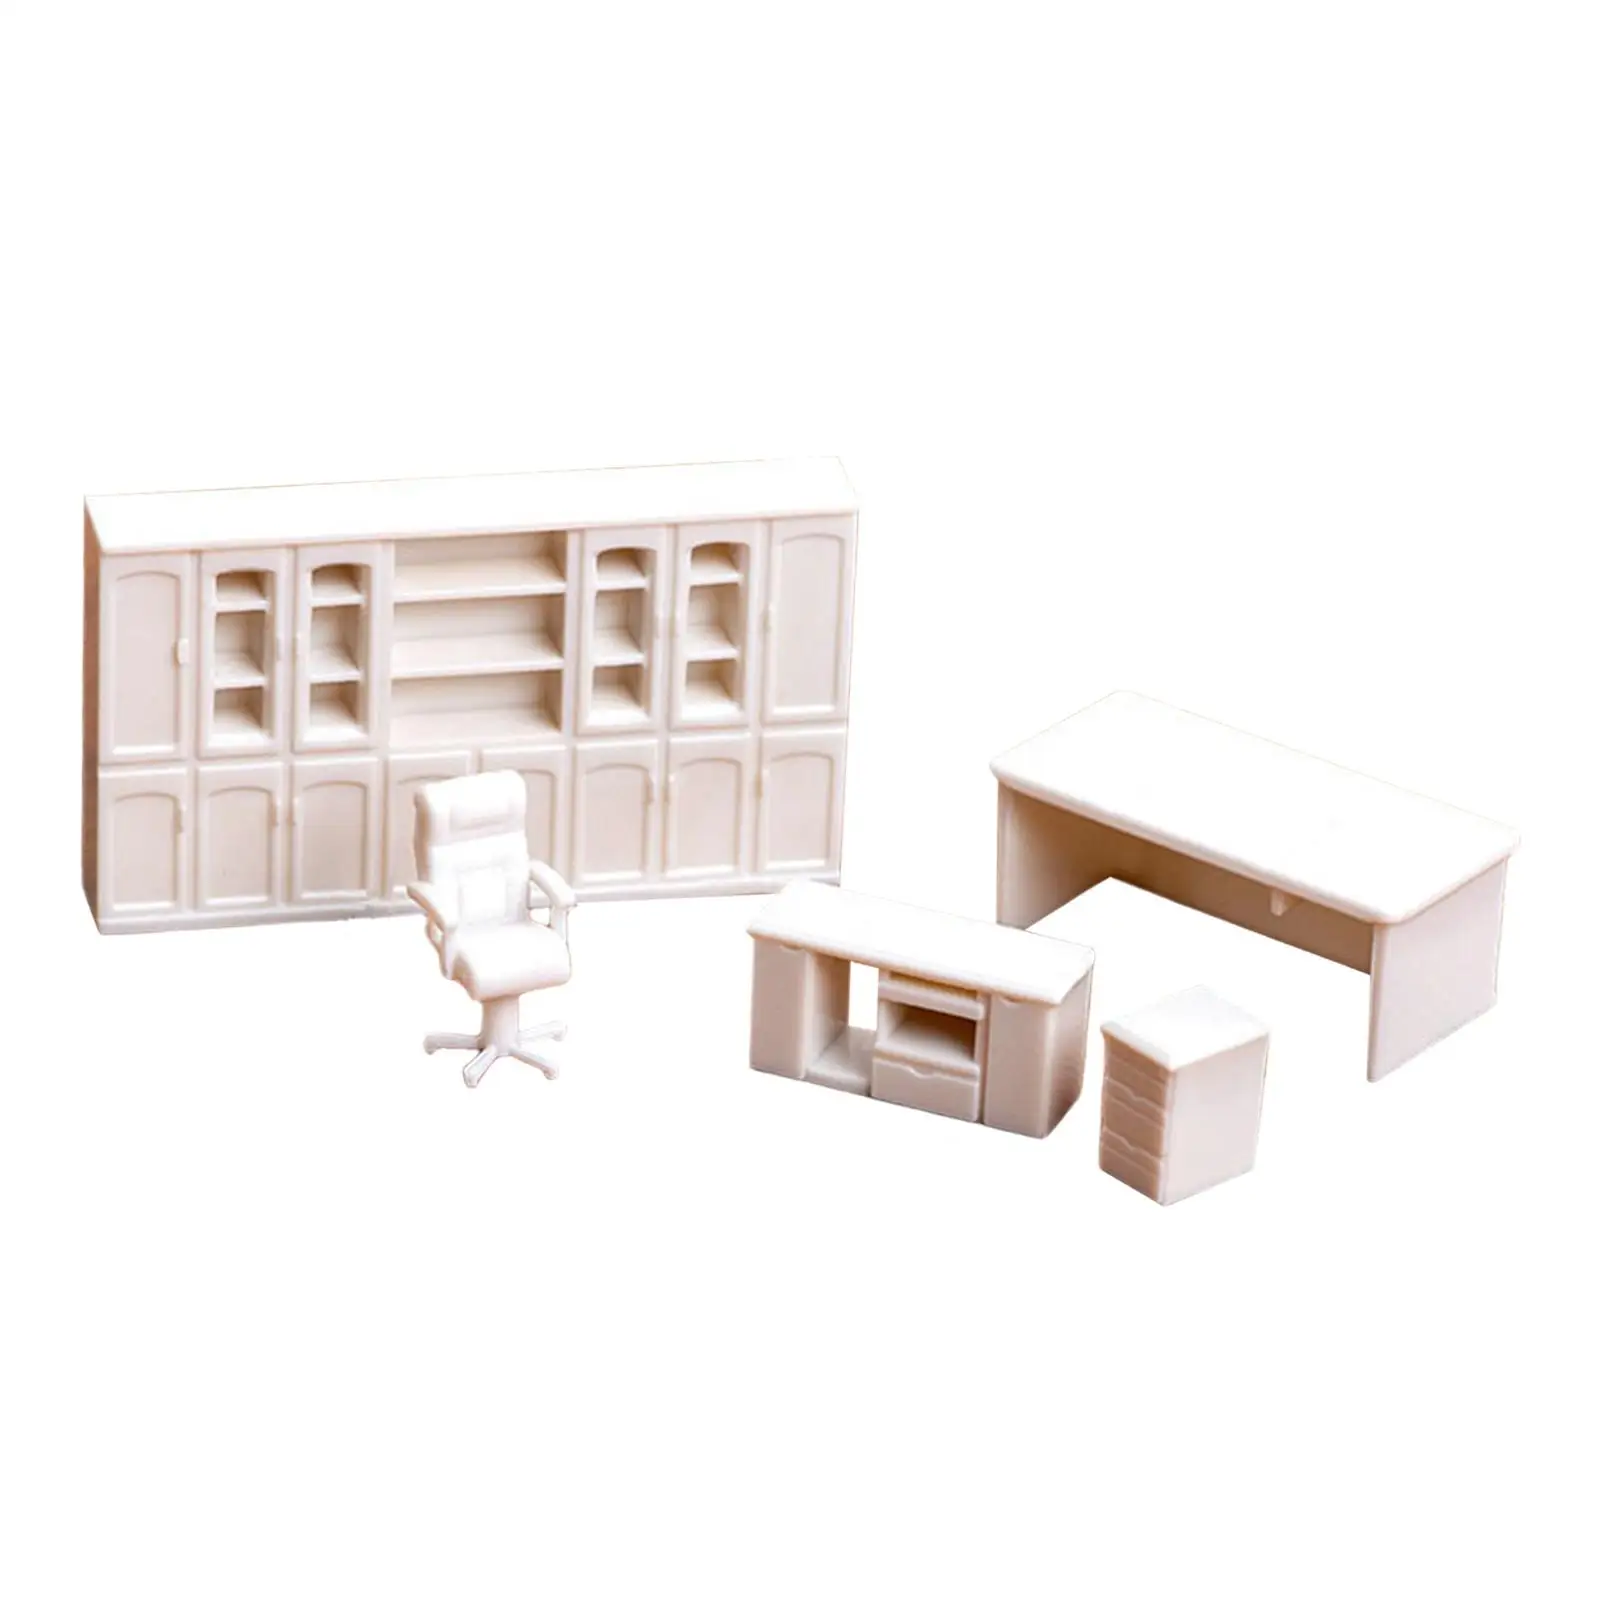 Miniature 1/50 Furniture Set Resin Mini Furniture Model for Dollhouse Decor Sand Table Decoration Photo Prop Diorama Layout